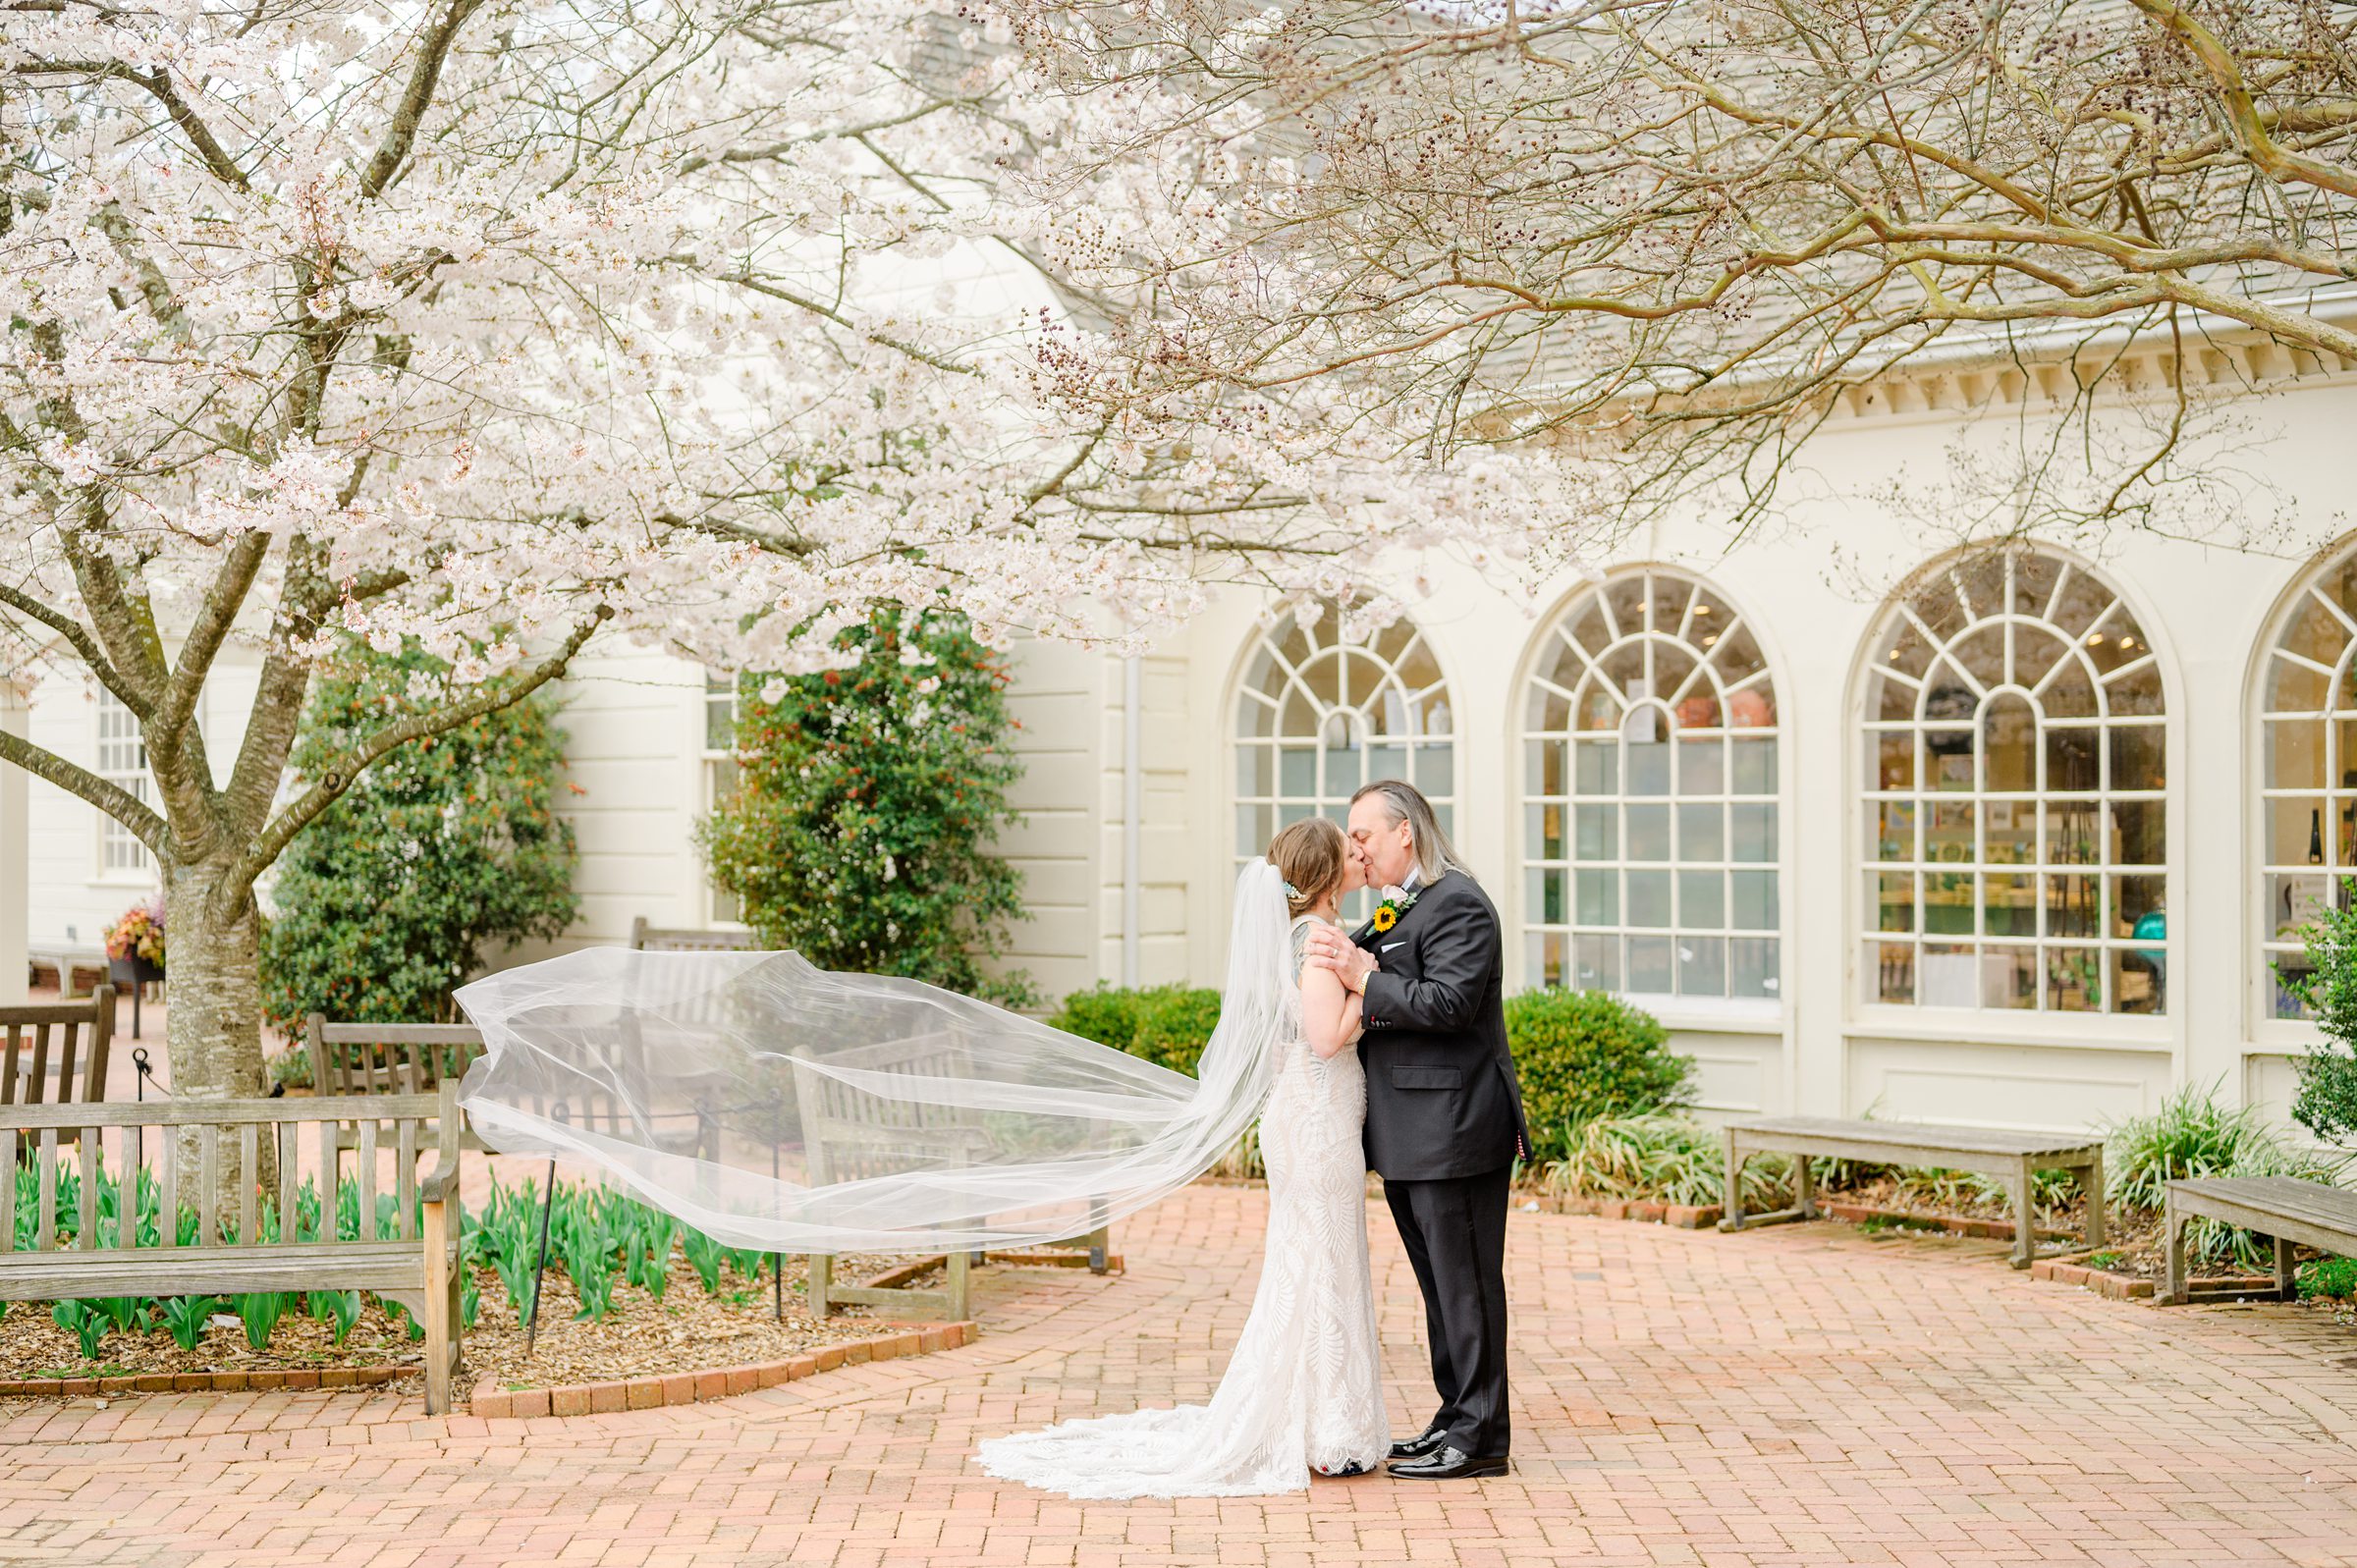 Spring Wedding at the Mount Vernon Inn Restaurant Wedding in Alexandria, Virginia photographed by Baltimore Photographer Cait Kramer Photography.